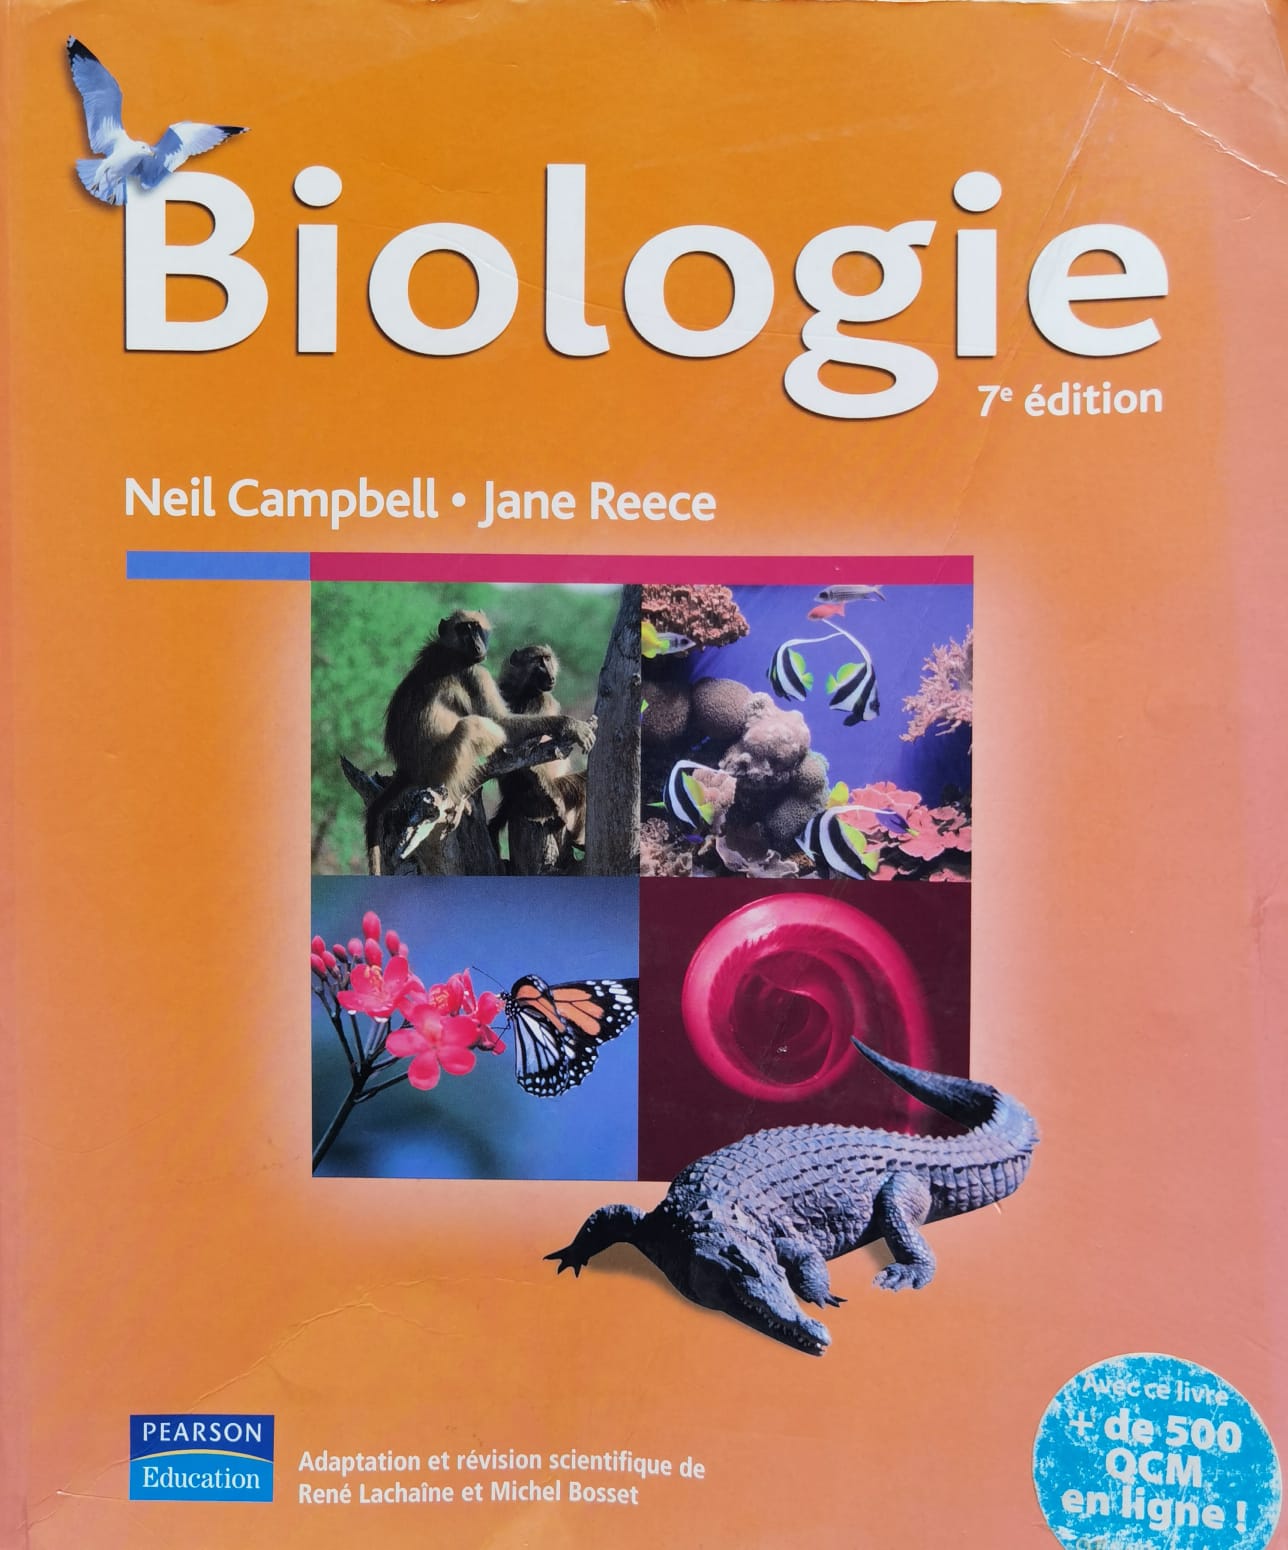 biologie 7 edition                                                                                   neil campbell   jane reece                                                                          